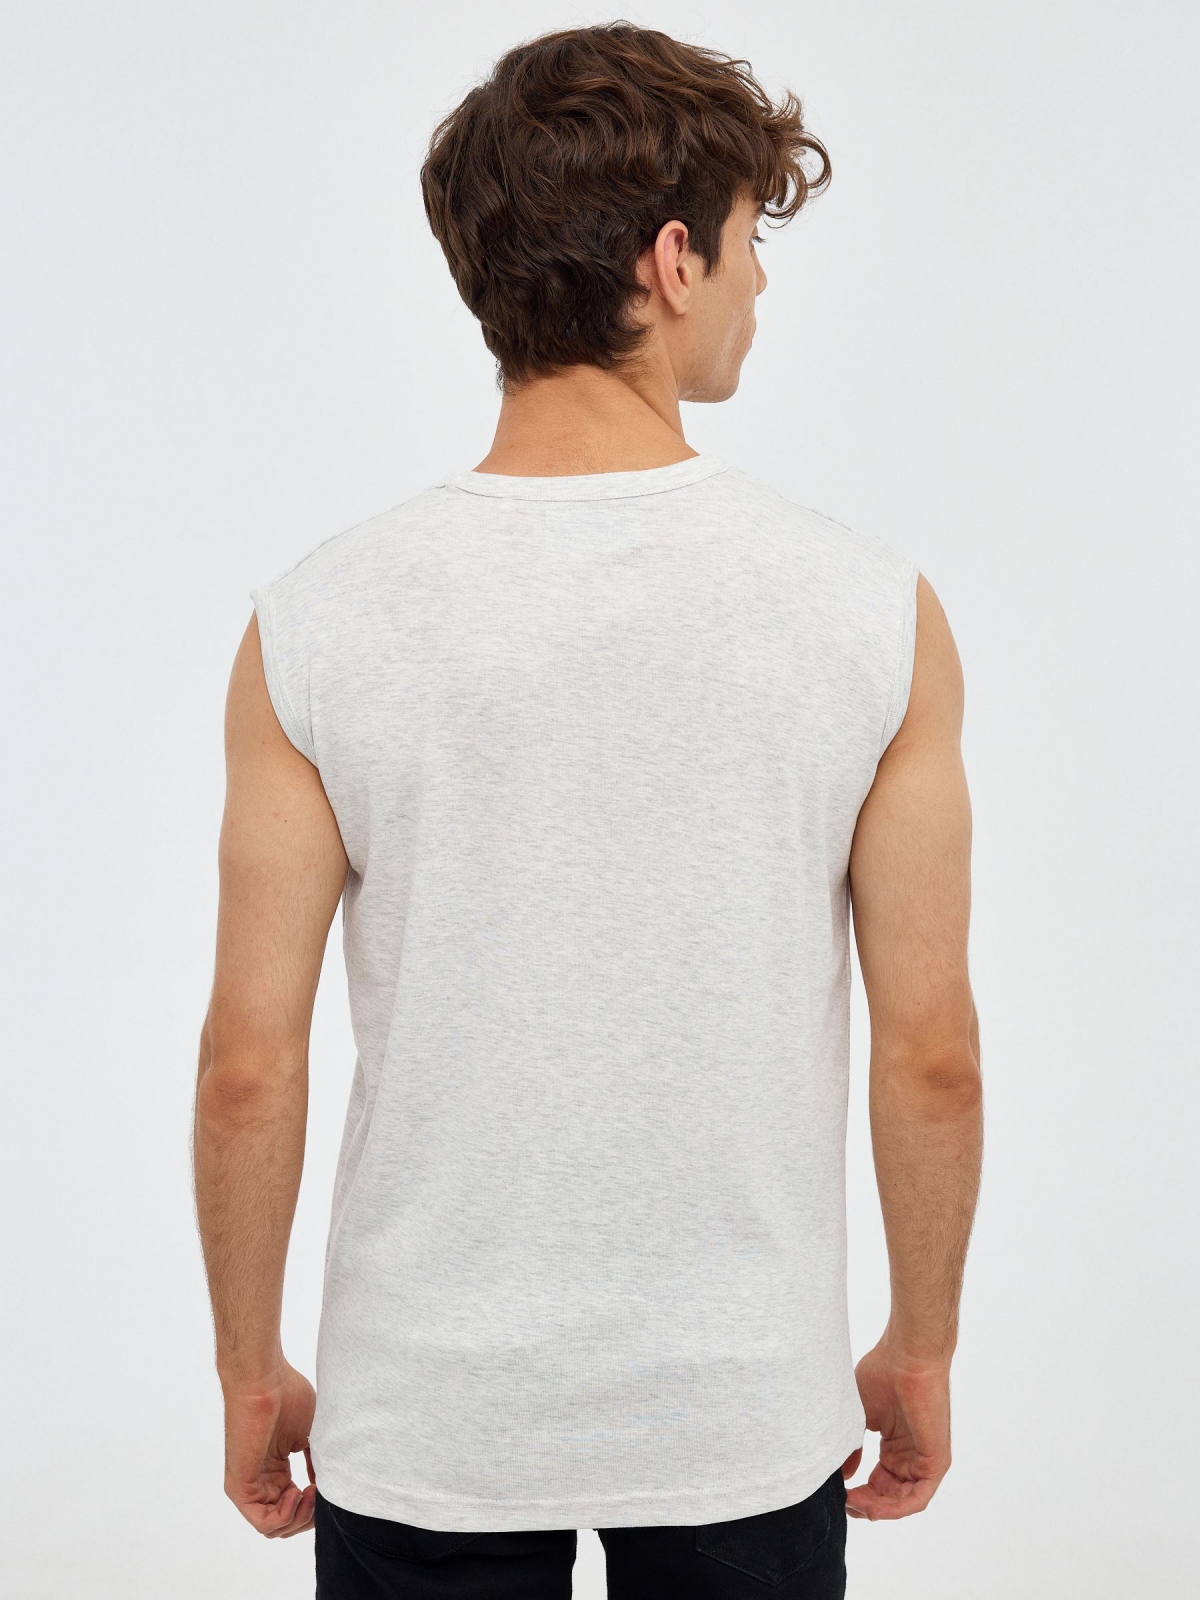 Camiseta básica sin mangas gris vista media trasera